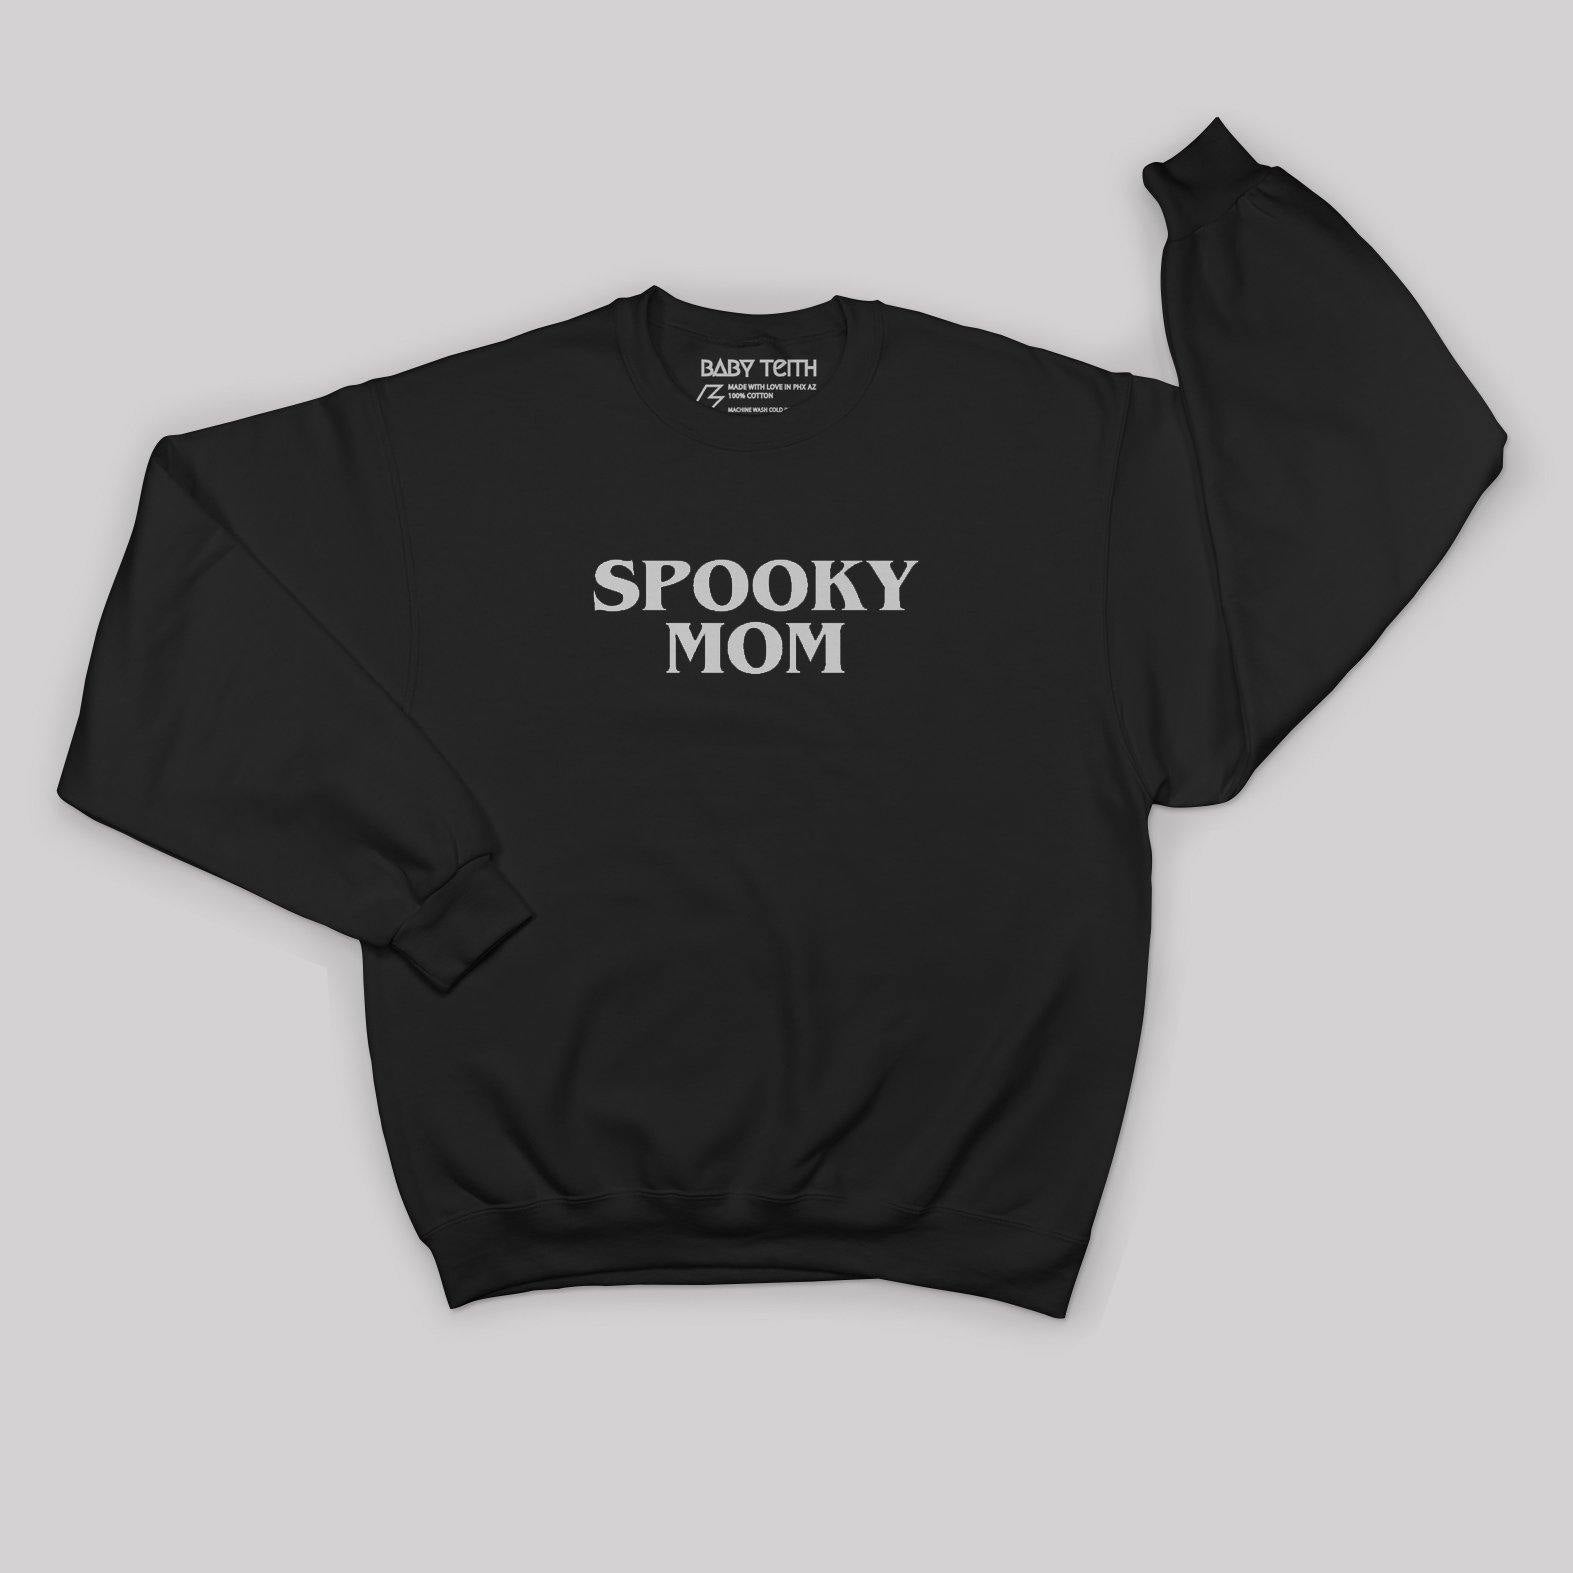 Spooky Mom Sweatshirt - Baby Teith